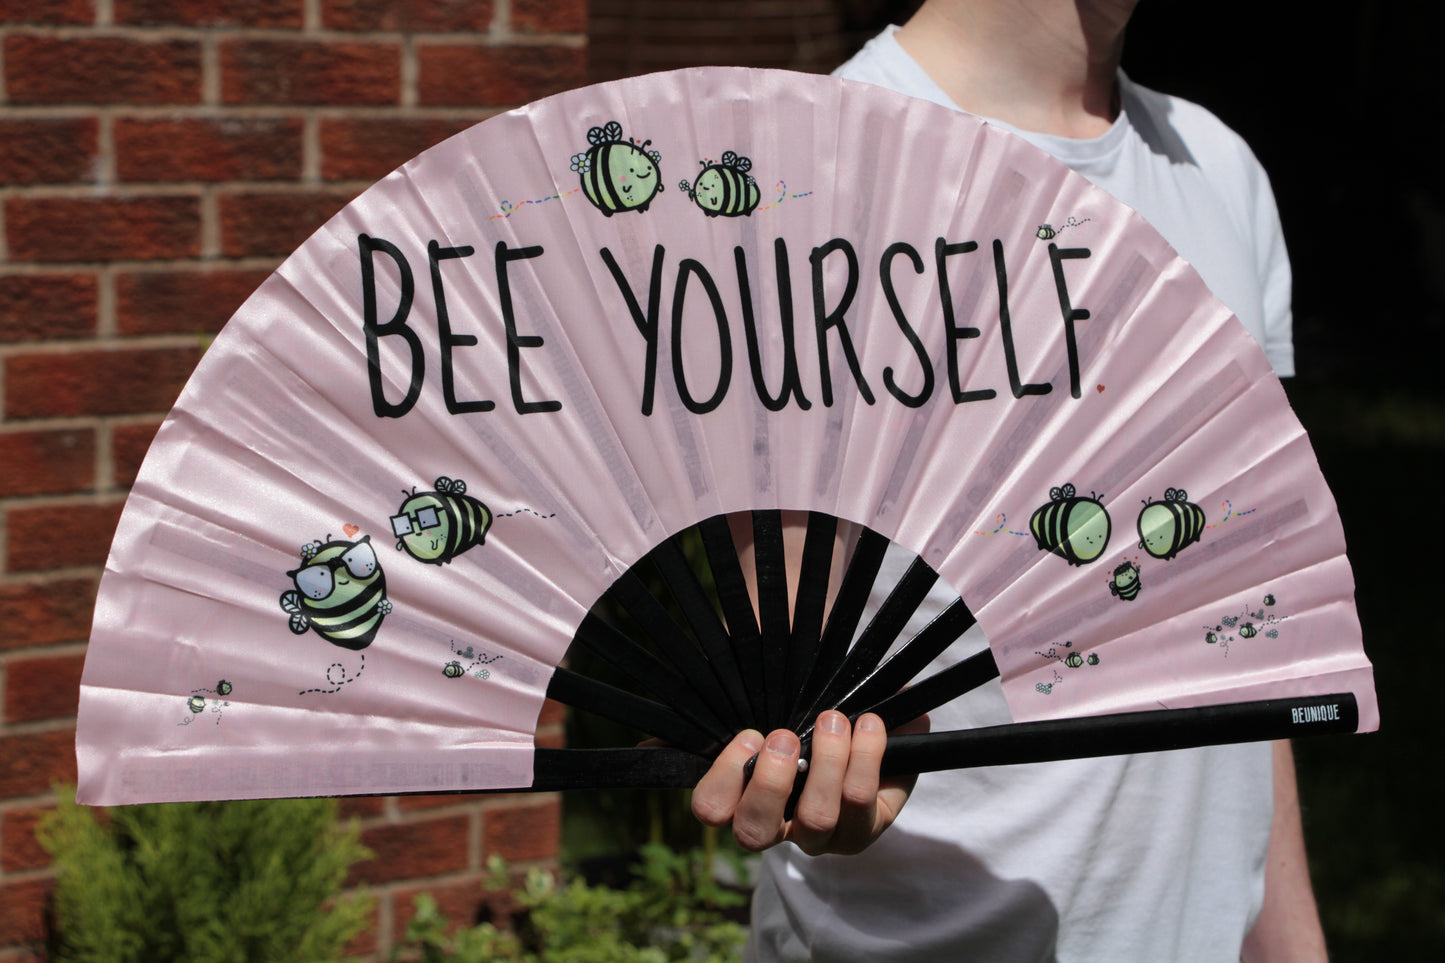 Bee Yourself Large Clack Fan - 66cm - Giant Festival Hand fan - Bumble bee Theme